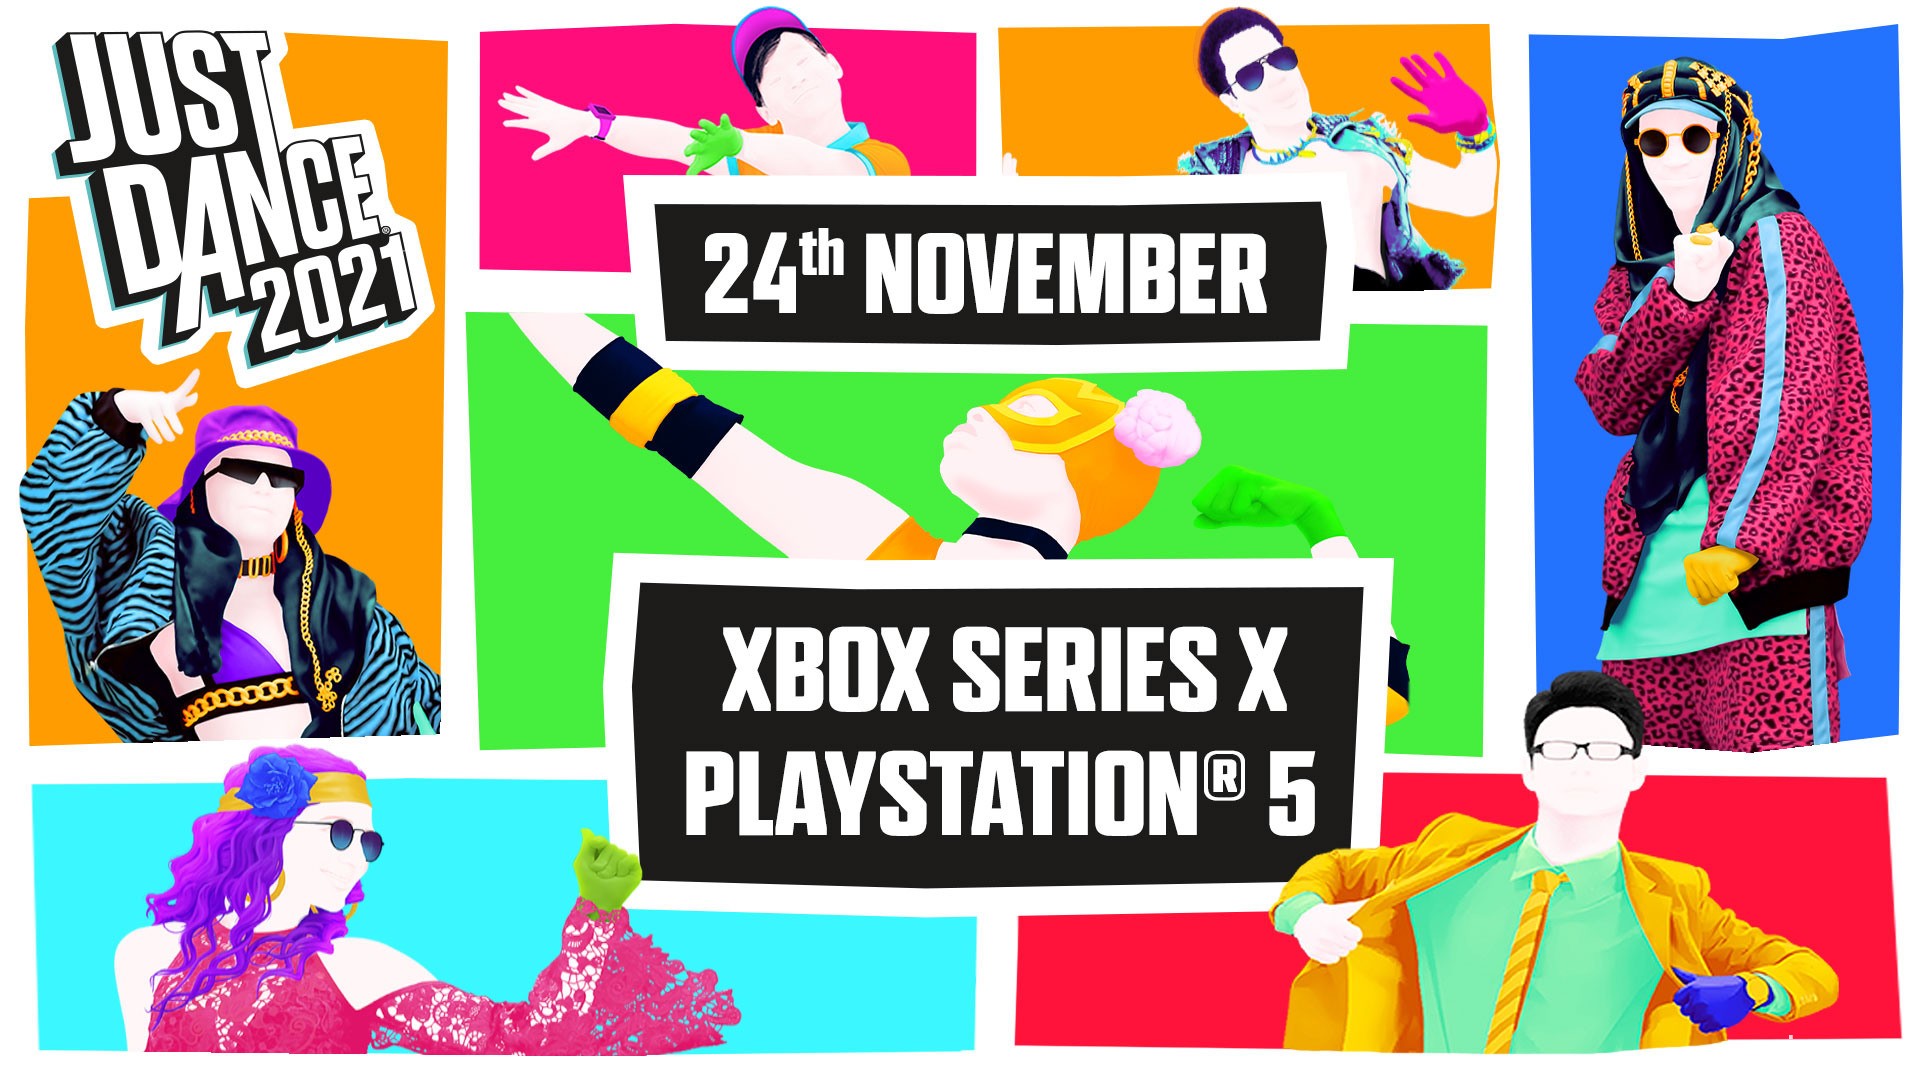 《Just Dance 舞力全开 2021》预定 11 月 24 日登陆 PS5 和 Xbox Series X|S 平台